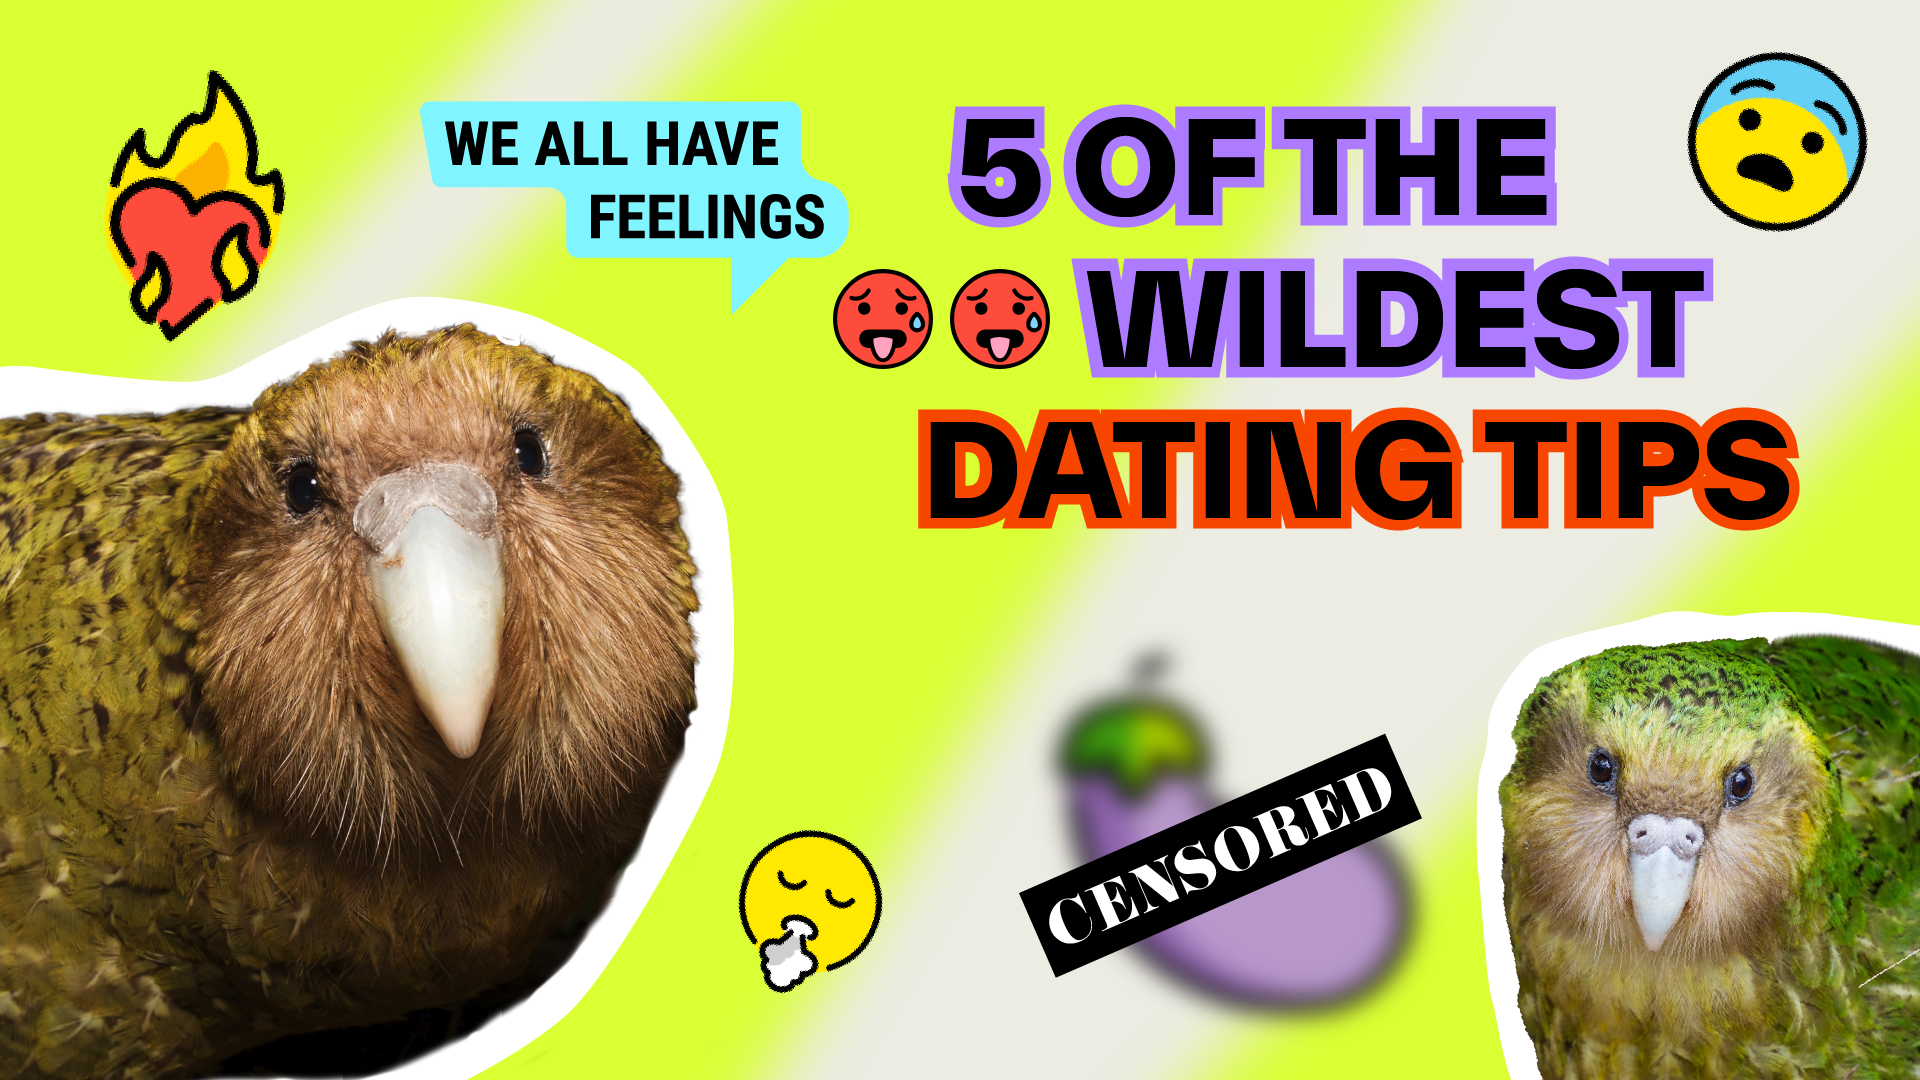 Dating Advice ft. Steve The Kakapo - Thumbnail